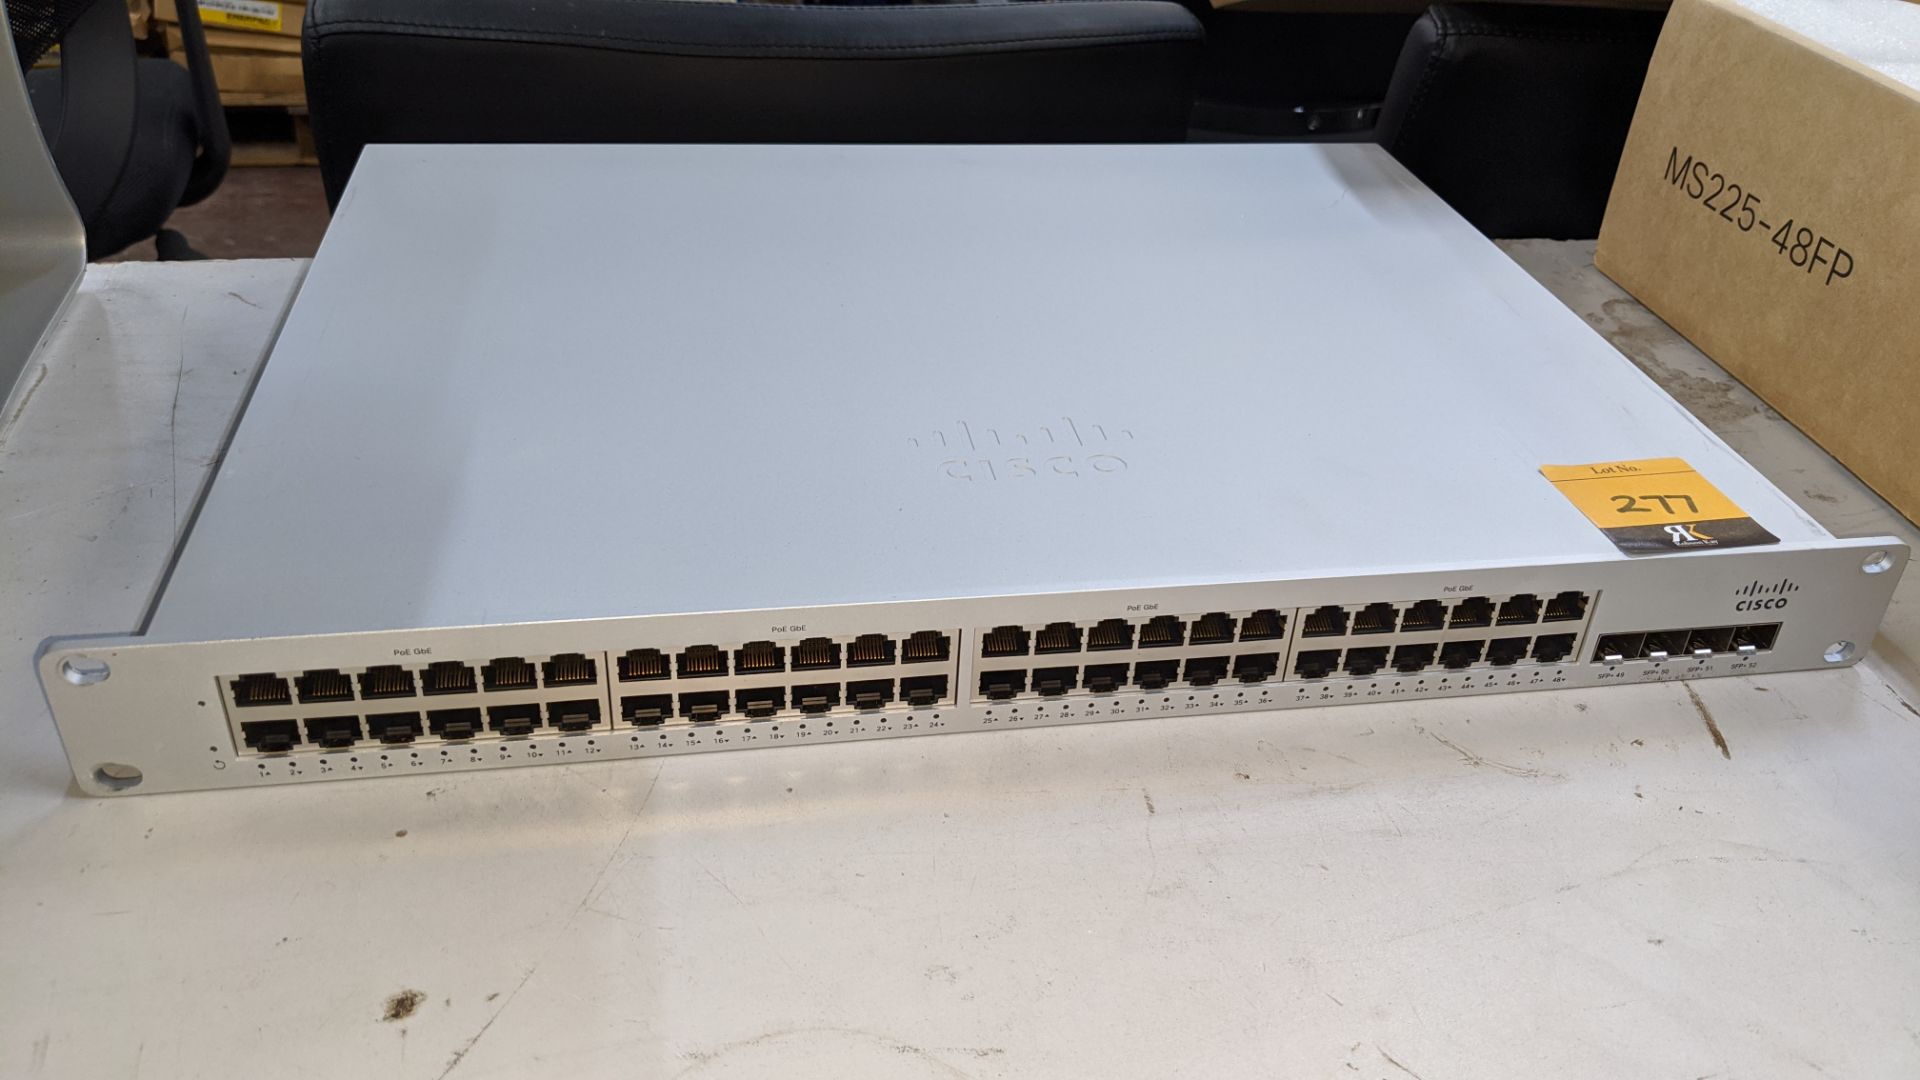 Cisco Meraki model MS225-48FP 48-port cloud managed stack switch